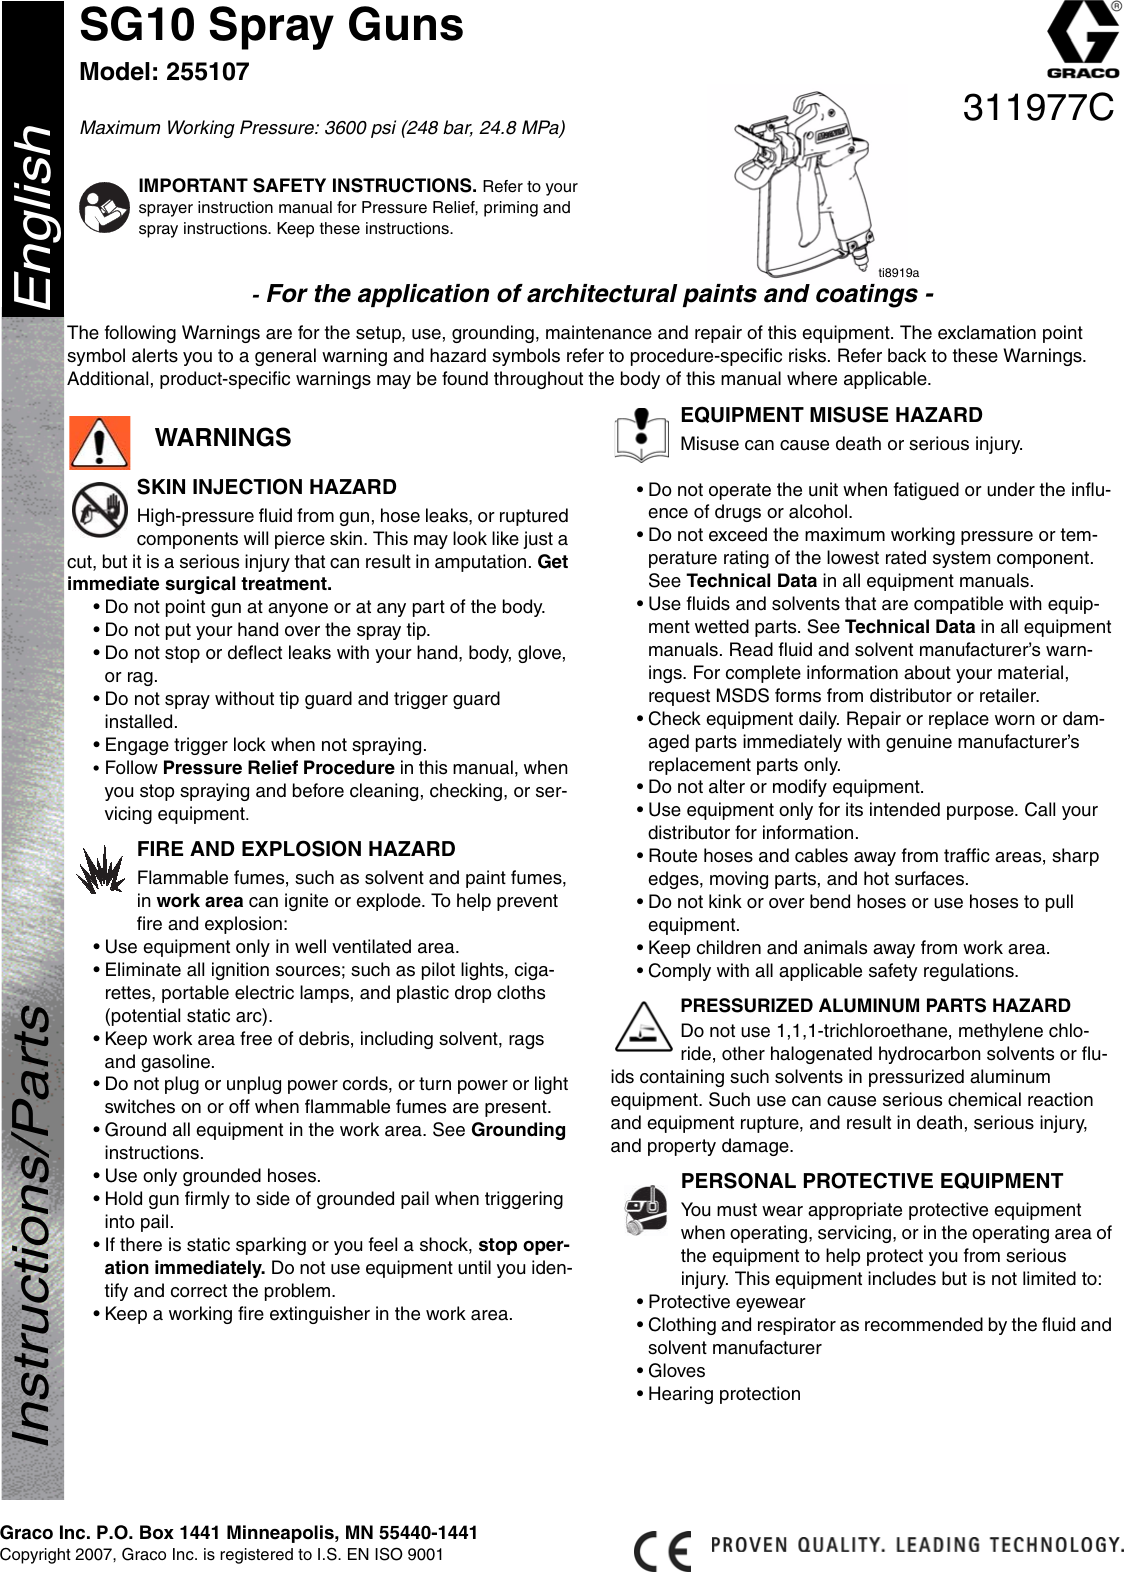 Page 1 of 4 - Graco-Inc Graco-Inc-255107-Users-Manual- 311977C, SG10 Spray Guns, Instructions, Parts, U.S. English  Graco-inc-255107-users-manual